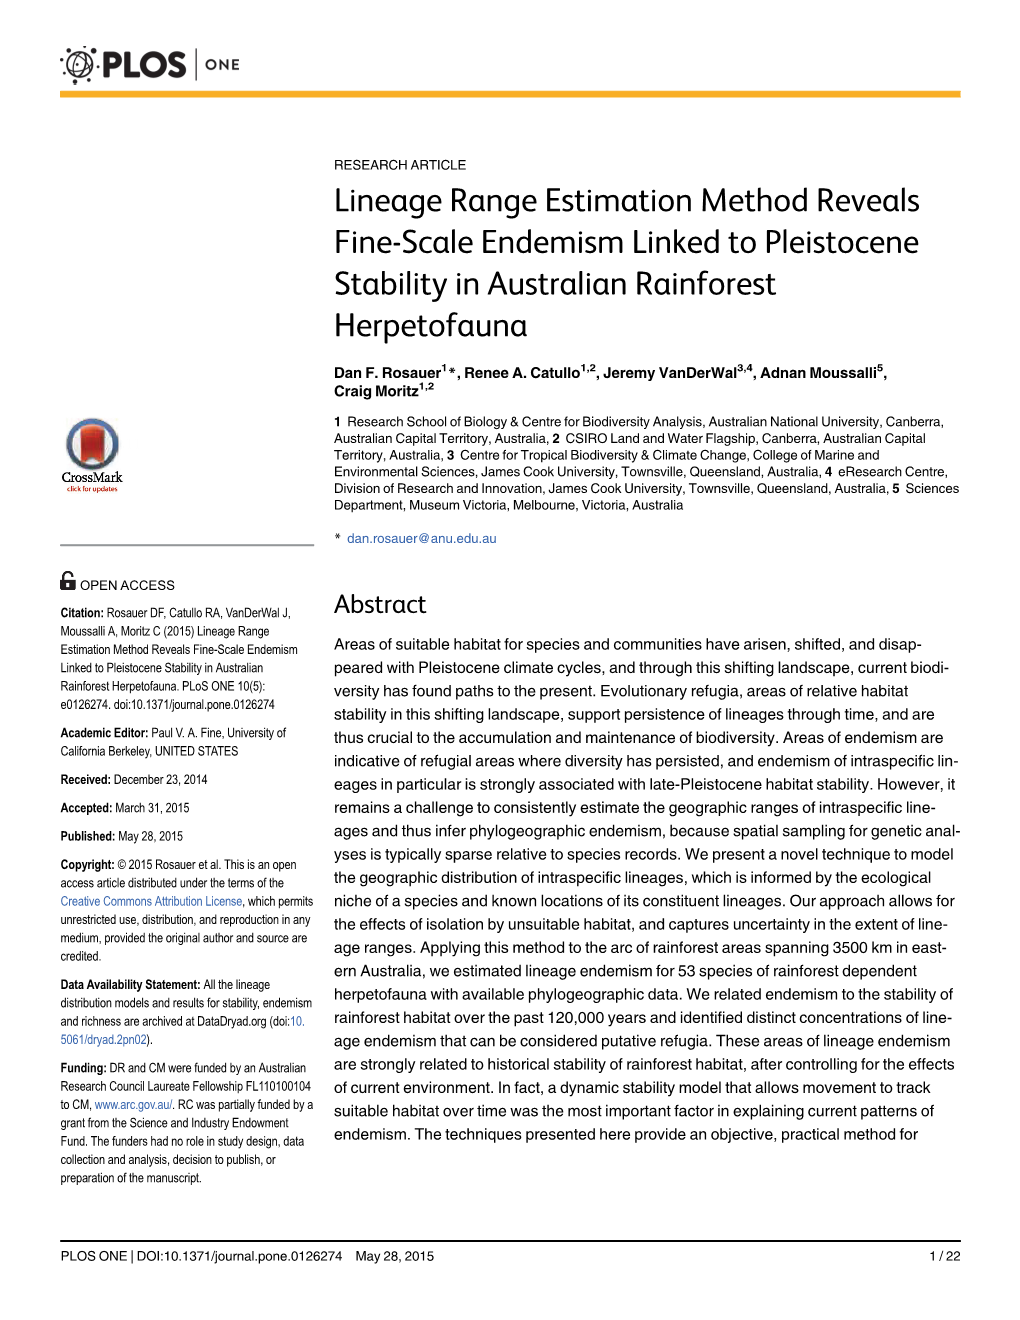 Lineage Range Estimation Method Reveals Fine-Scale Endemism Linked to Pleistocene Stability in Australian Rainforest Herpetofauna